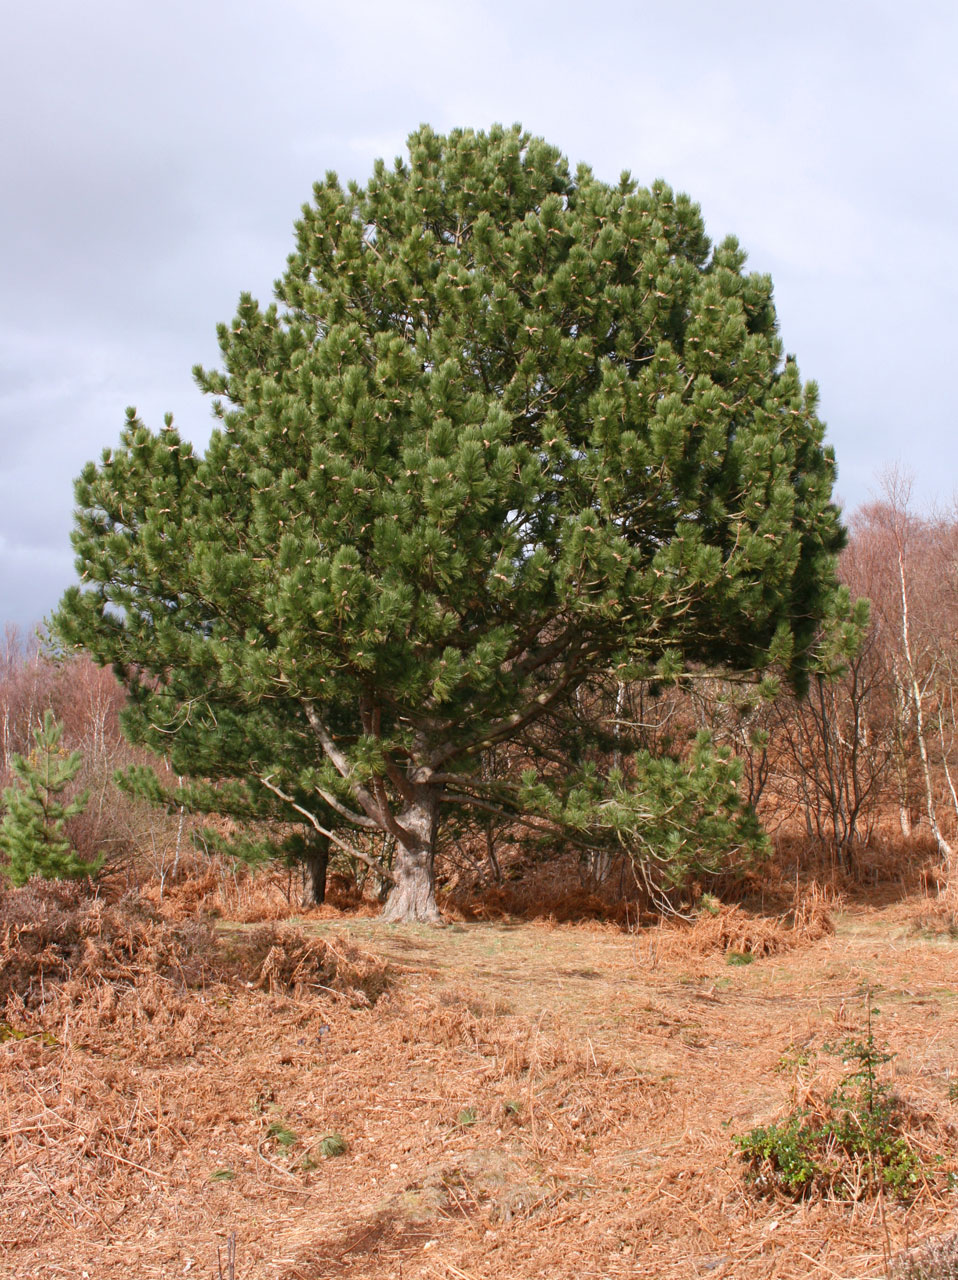 A single rounded shaped fir tree